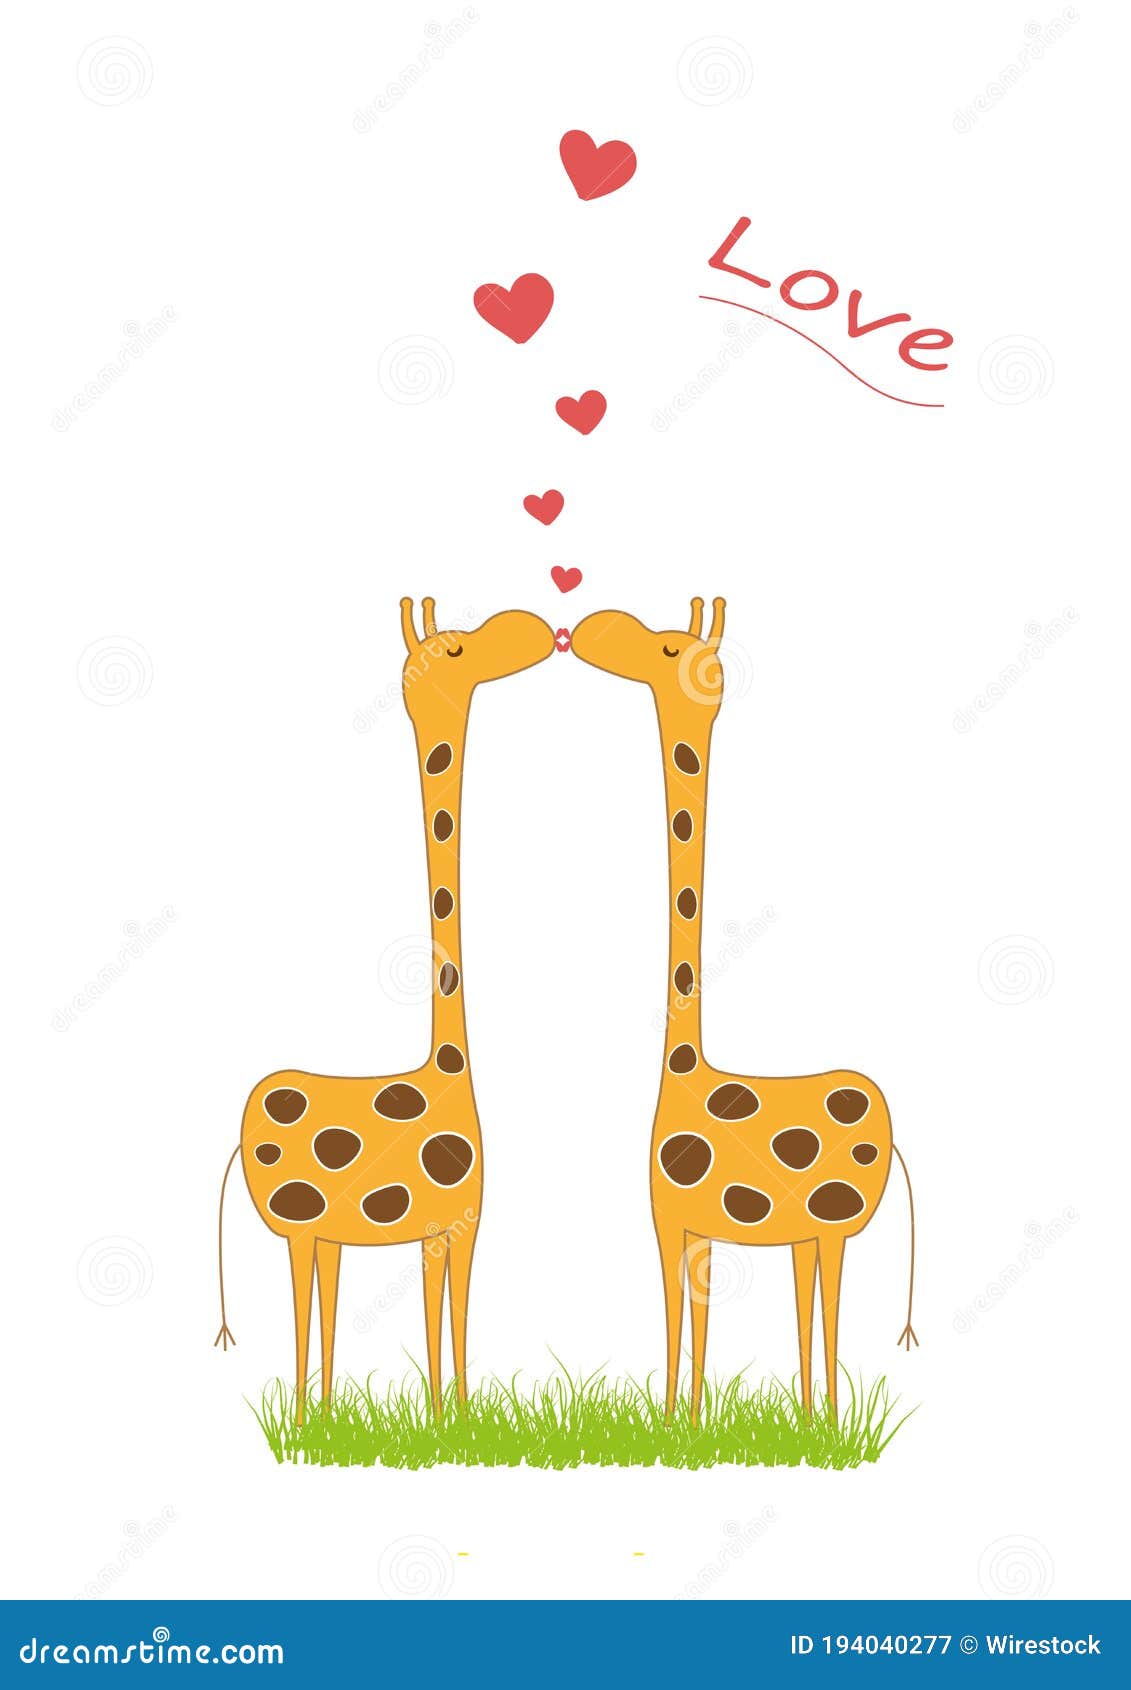 Mini Poster 40cm x 50cm new and sealed Giraffes Kissing